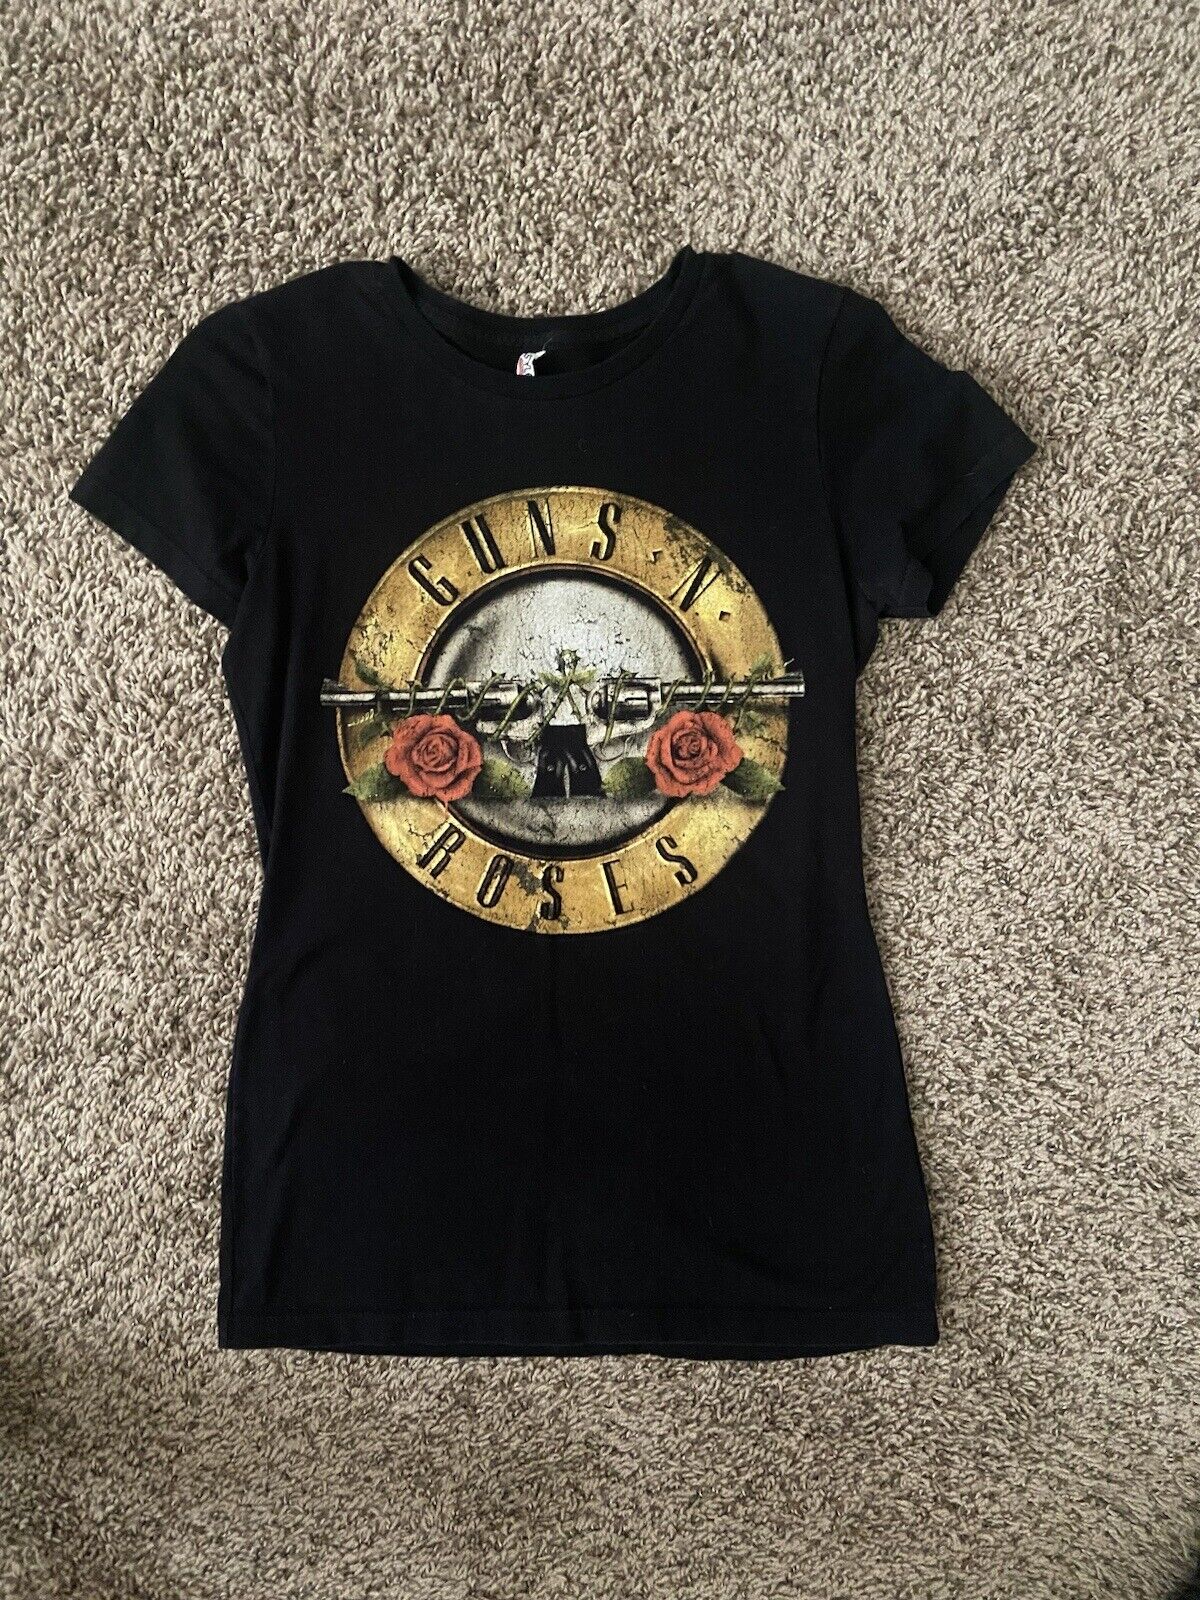 Guns N Roses shirt small